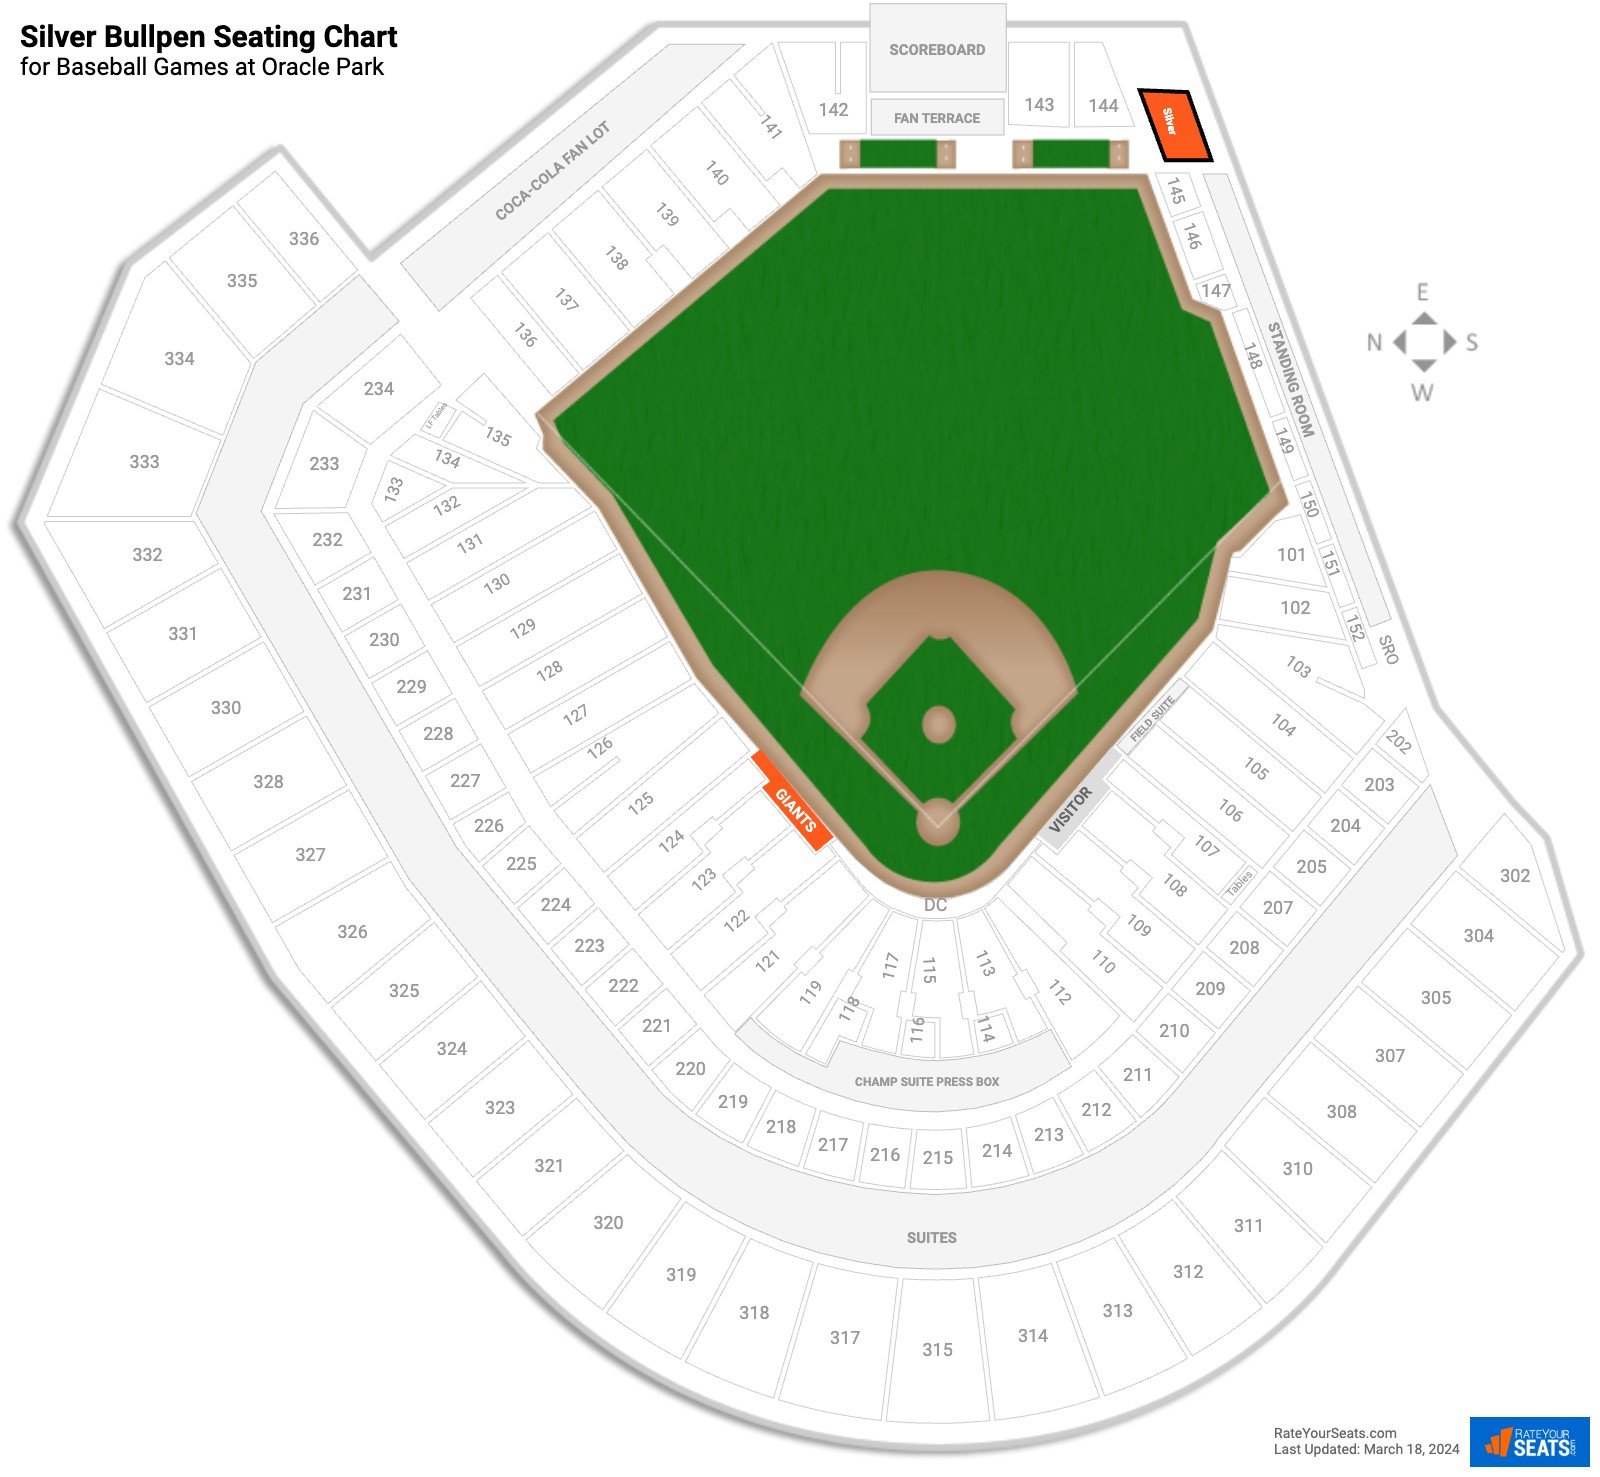 Baseball Silver Bullpen Seating Chart at Oracle Park